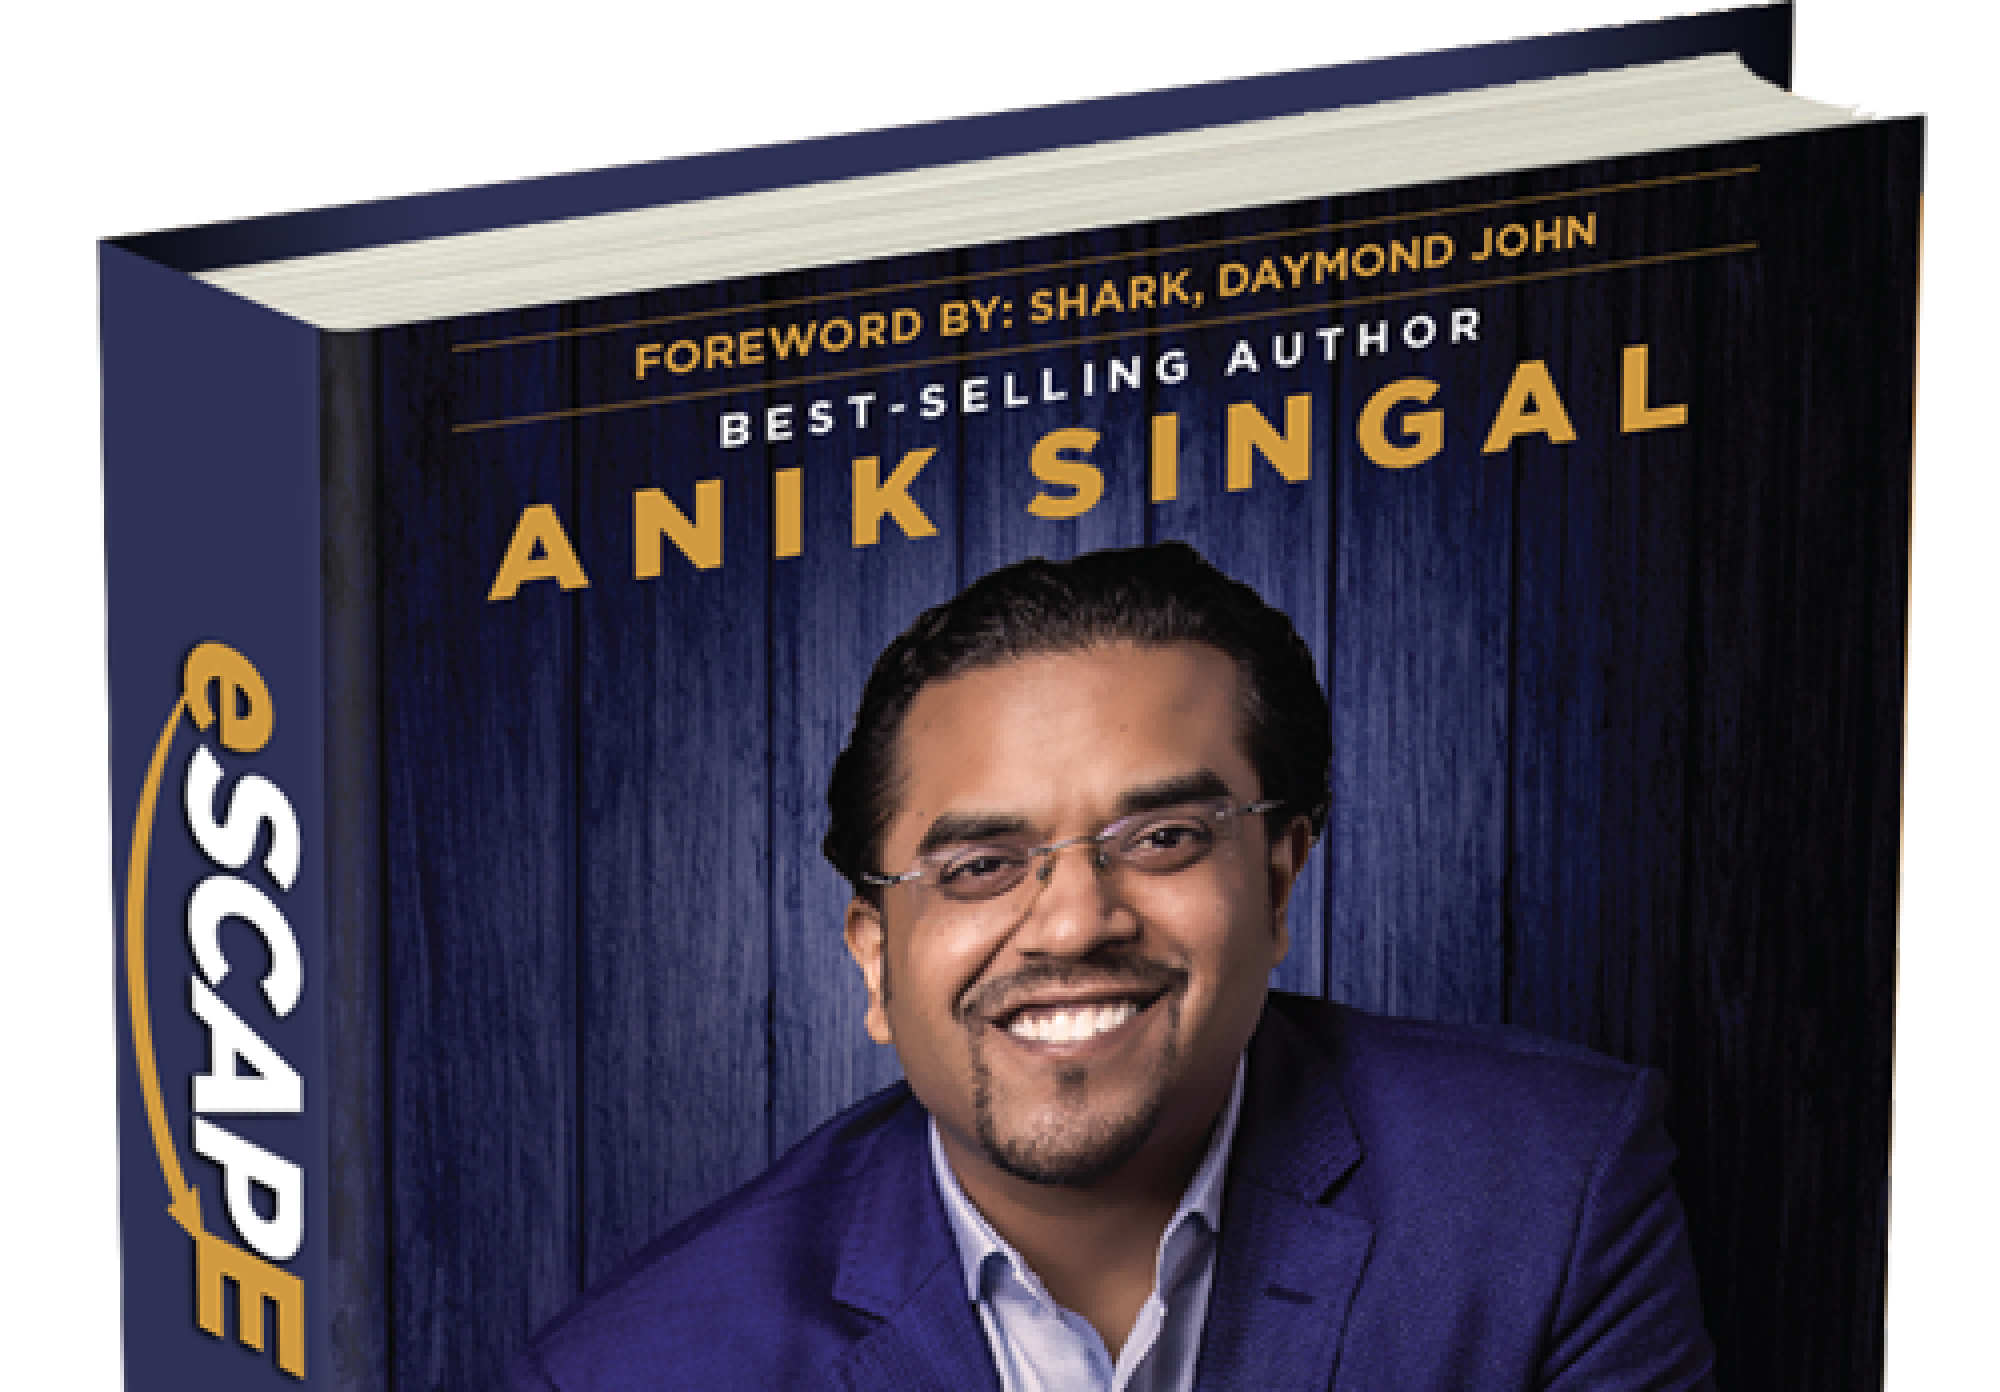 eSCAPE Book by Anik Singal